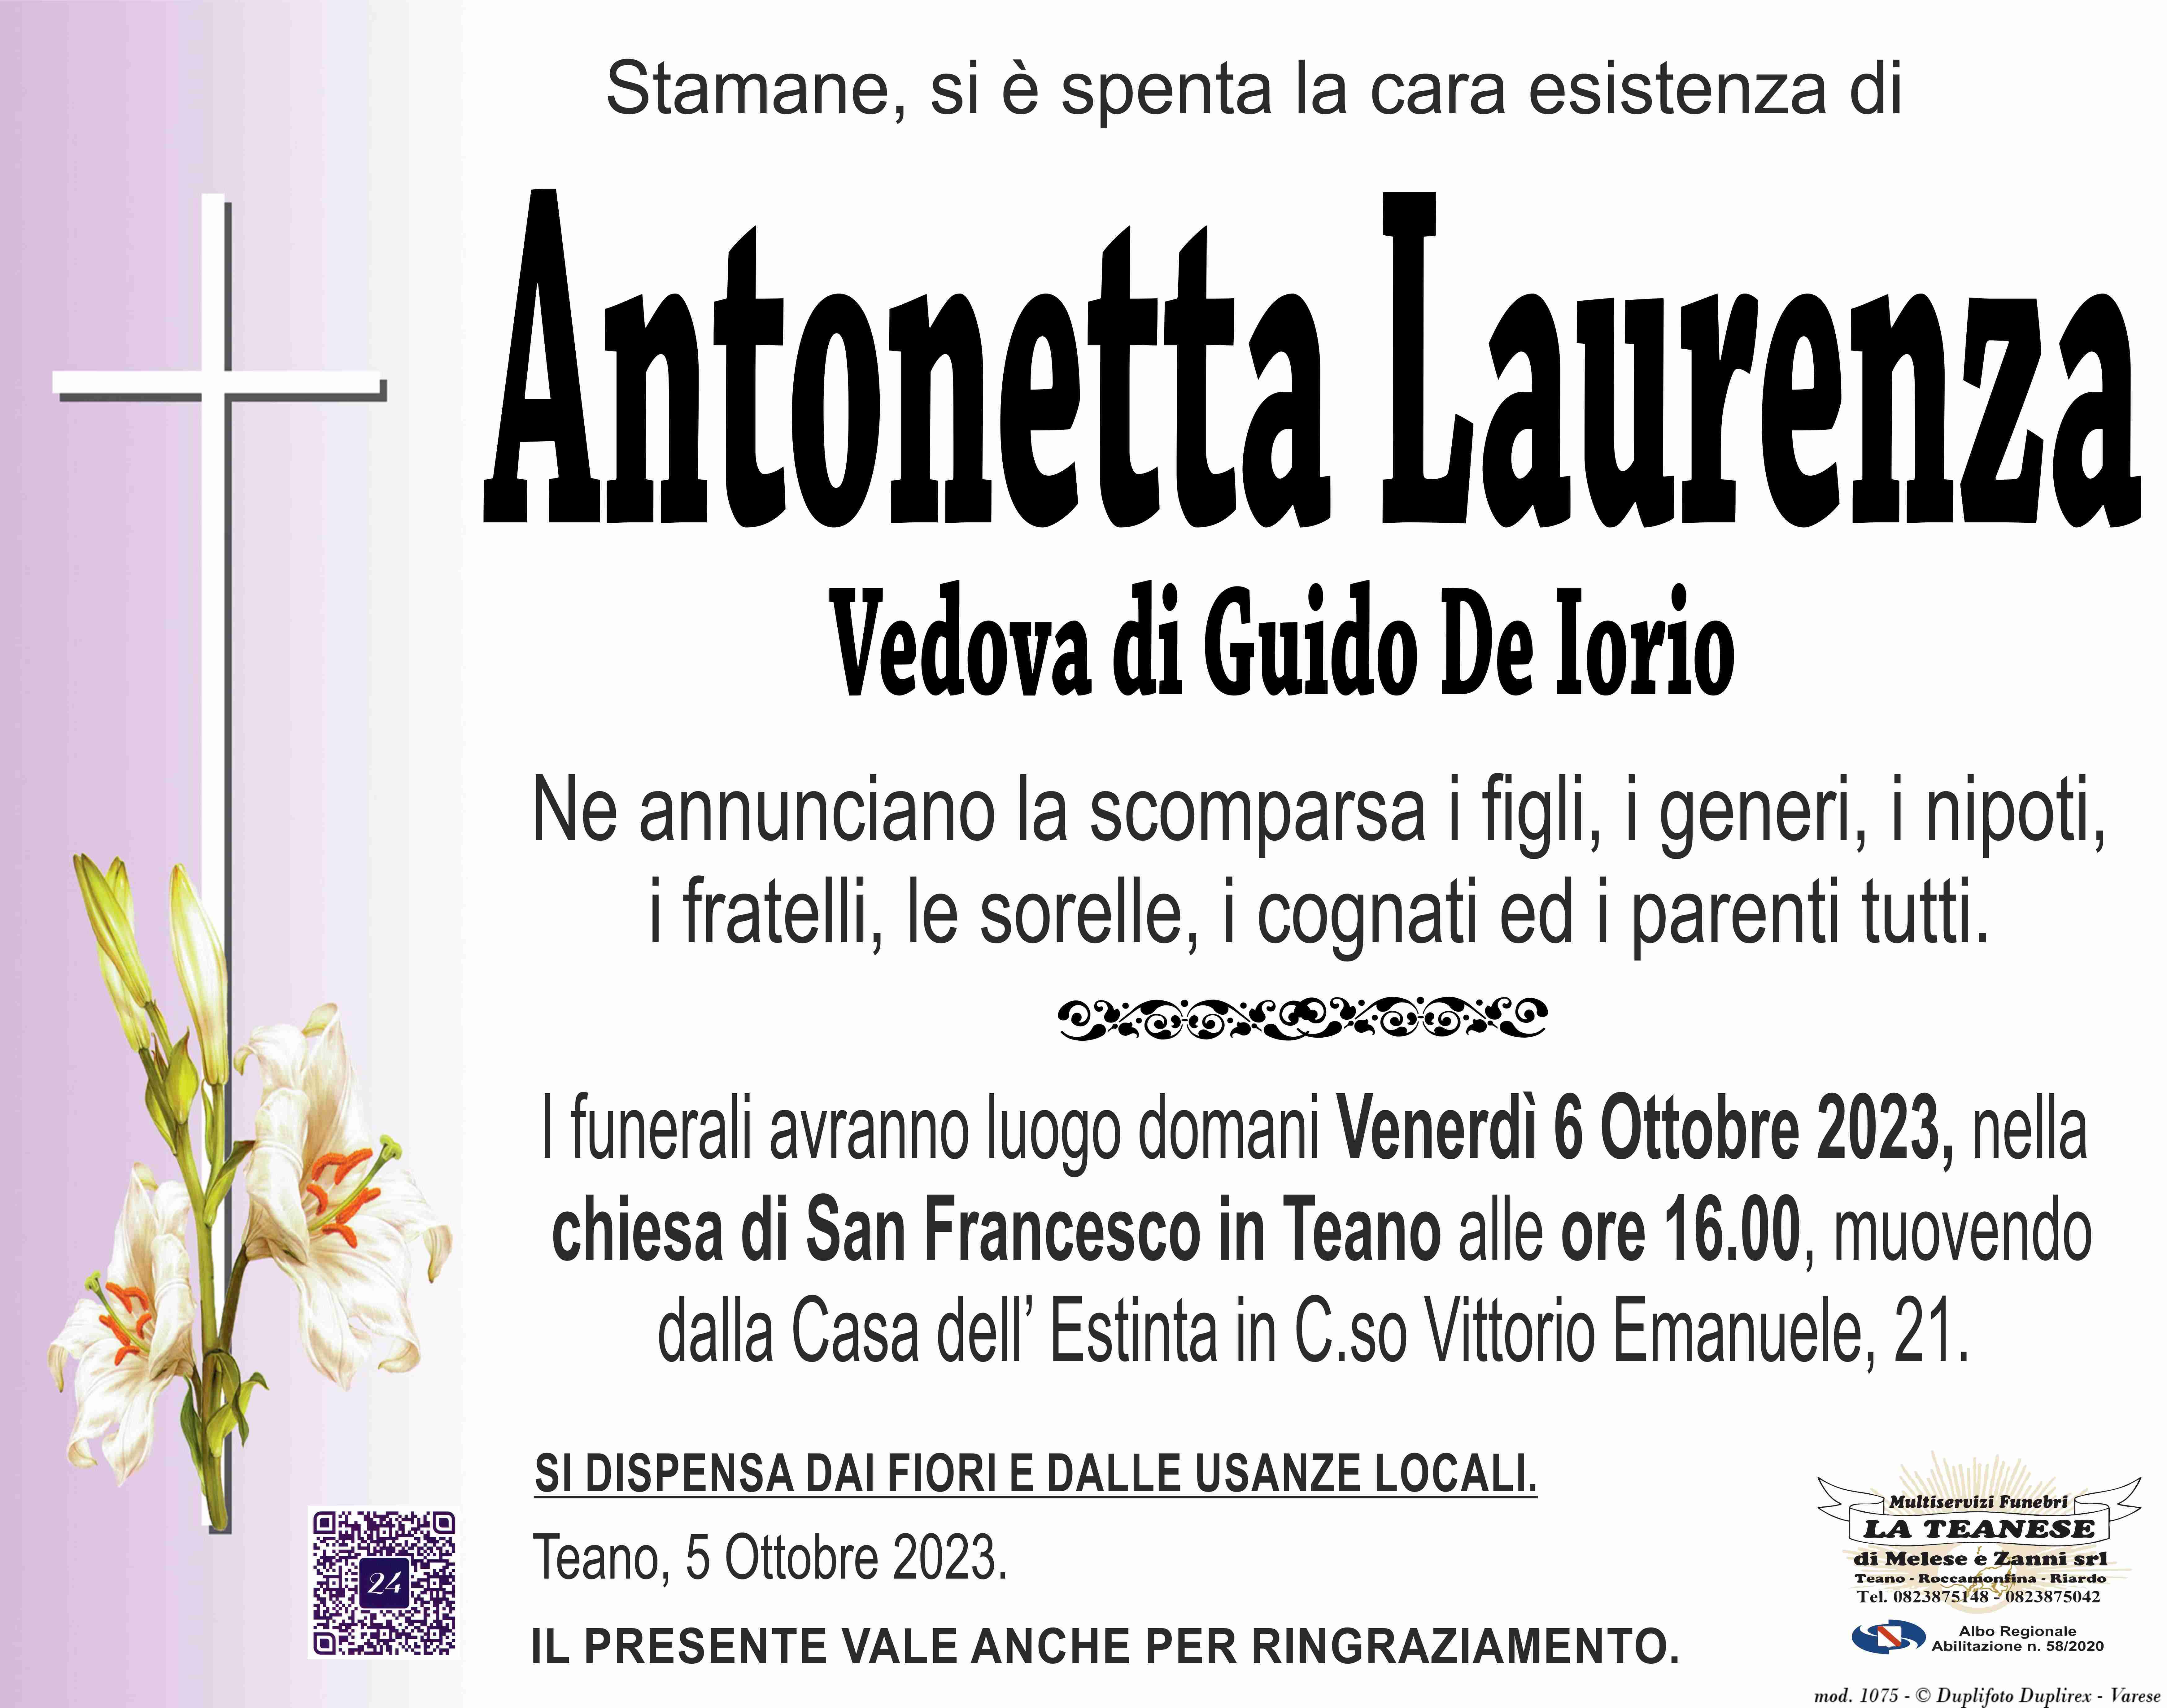 Antonetta Laurenza